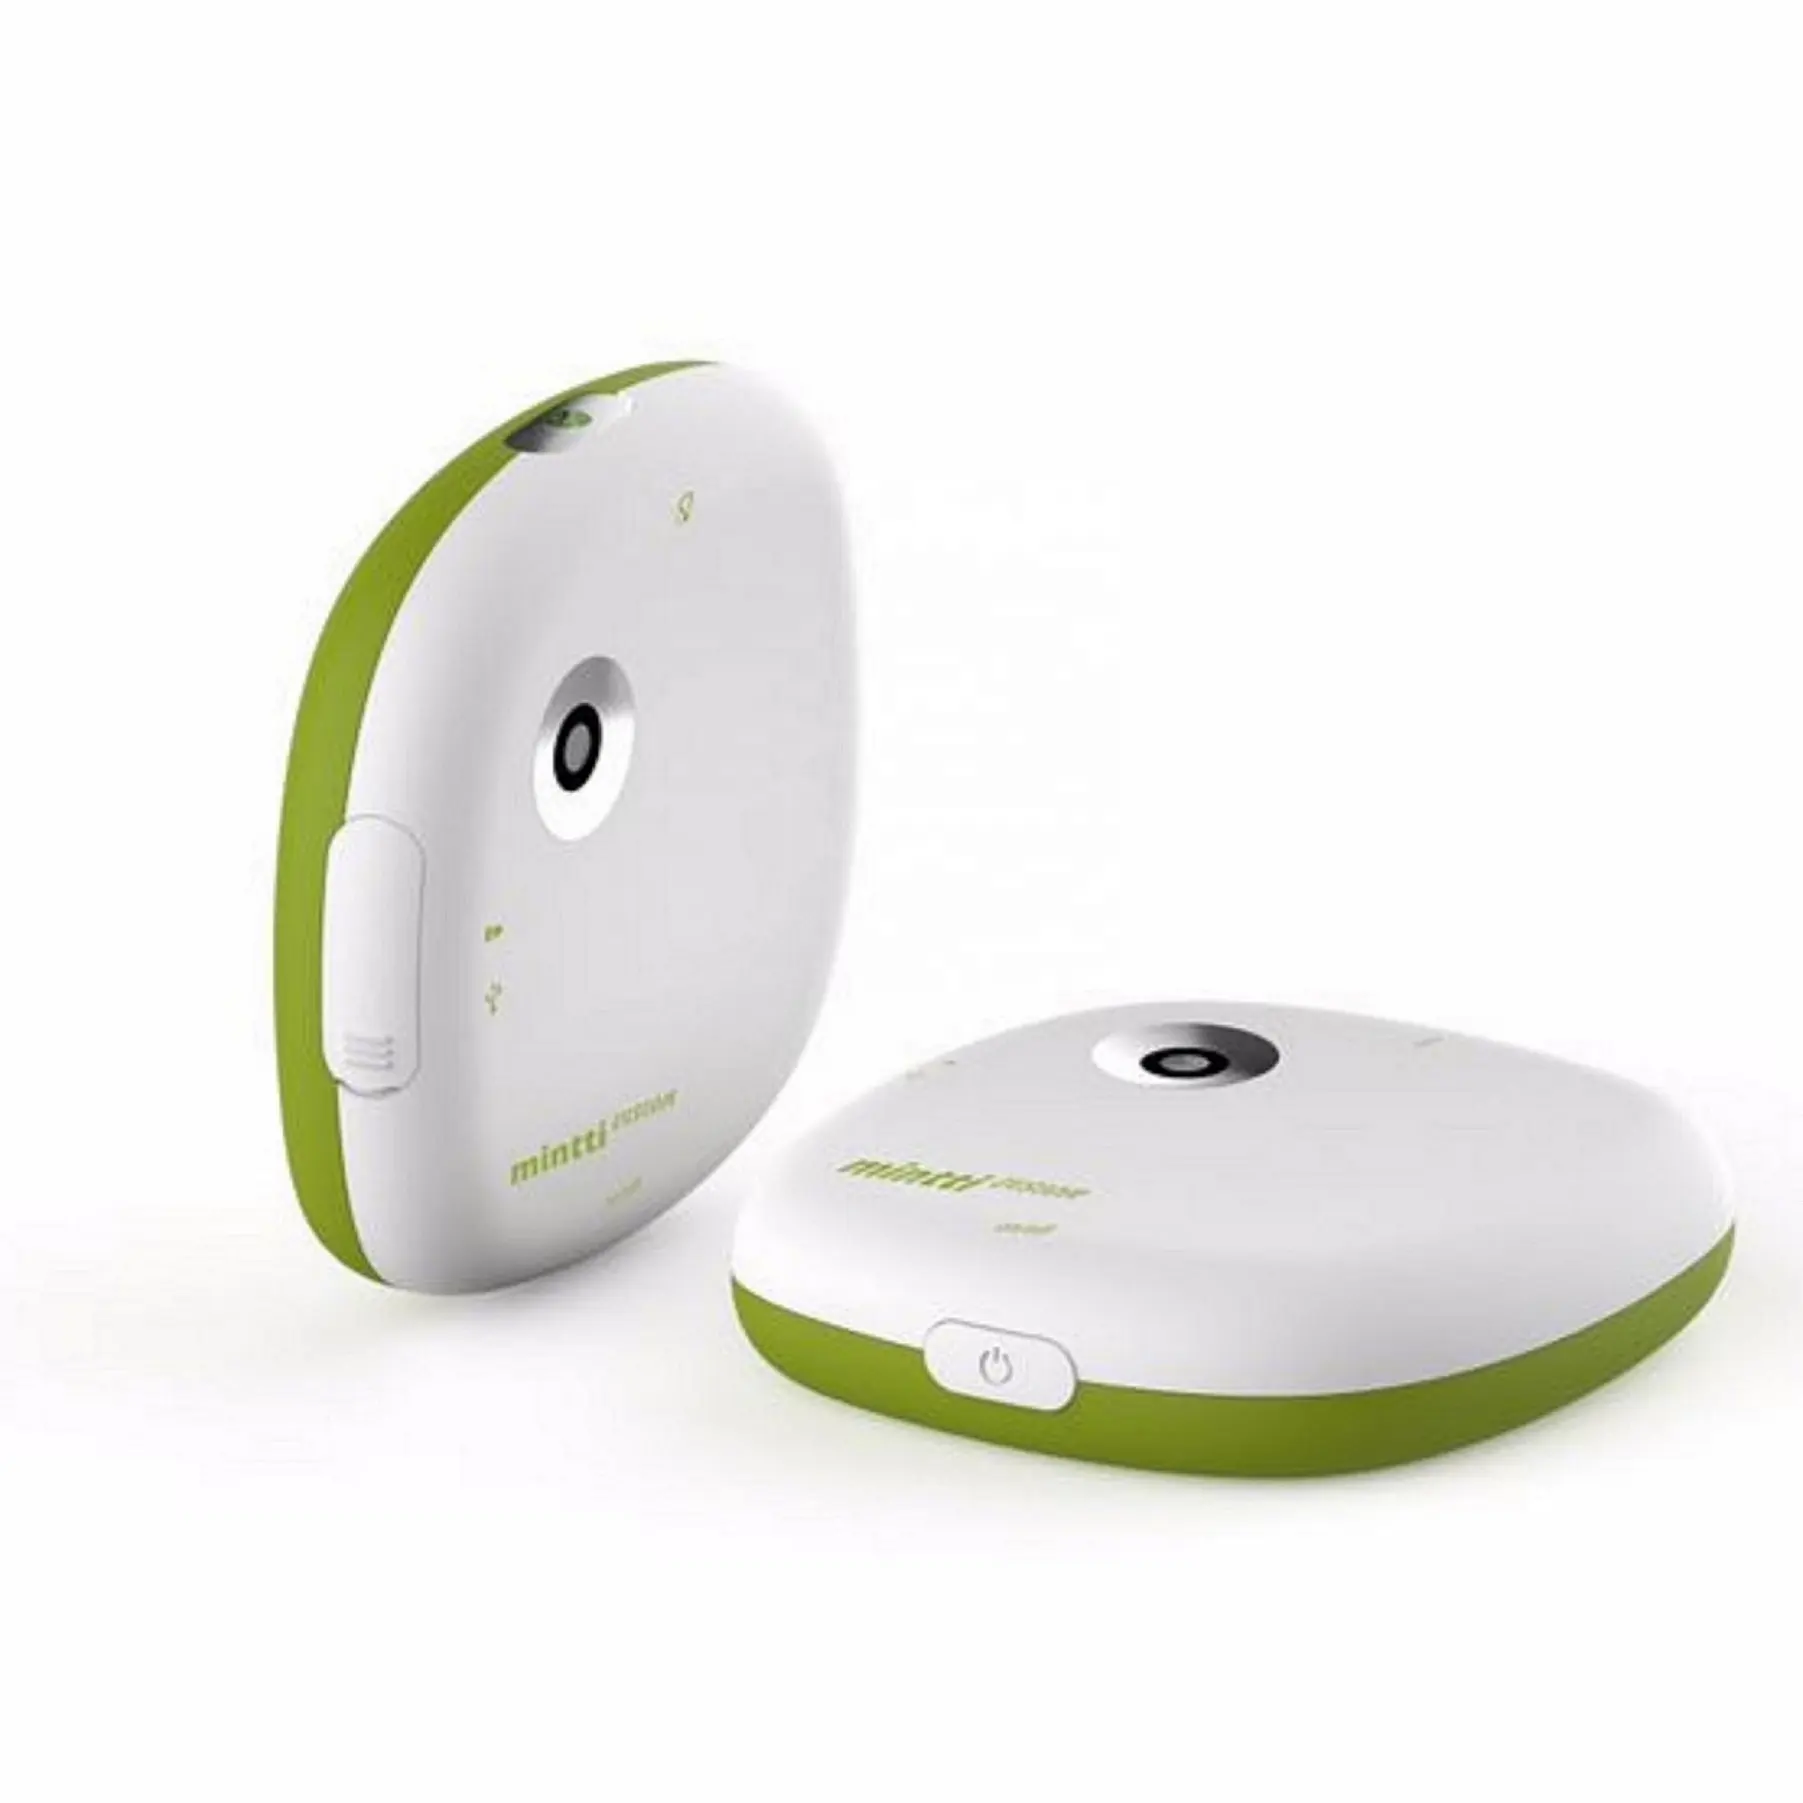 all in one telemedicina medical device rechargeable digital blood pressure smart glucose meter ECG glucometer